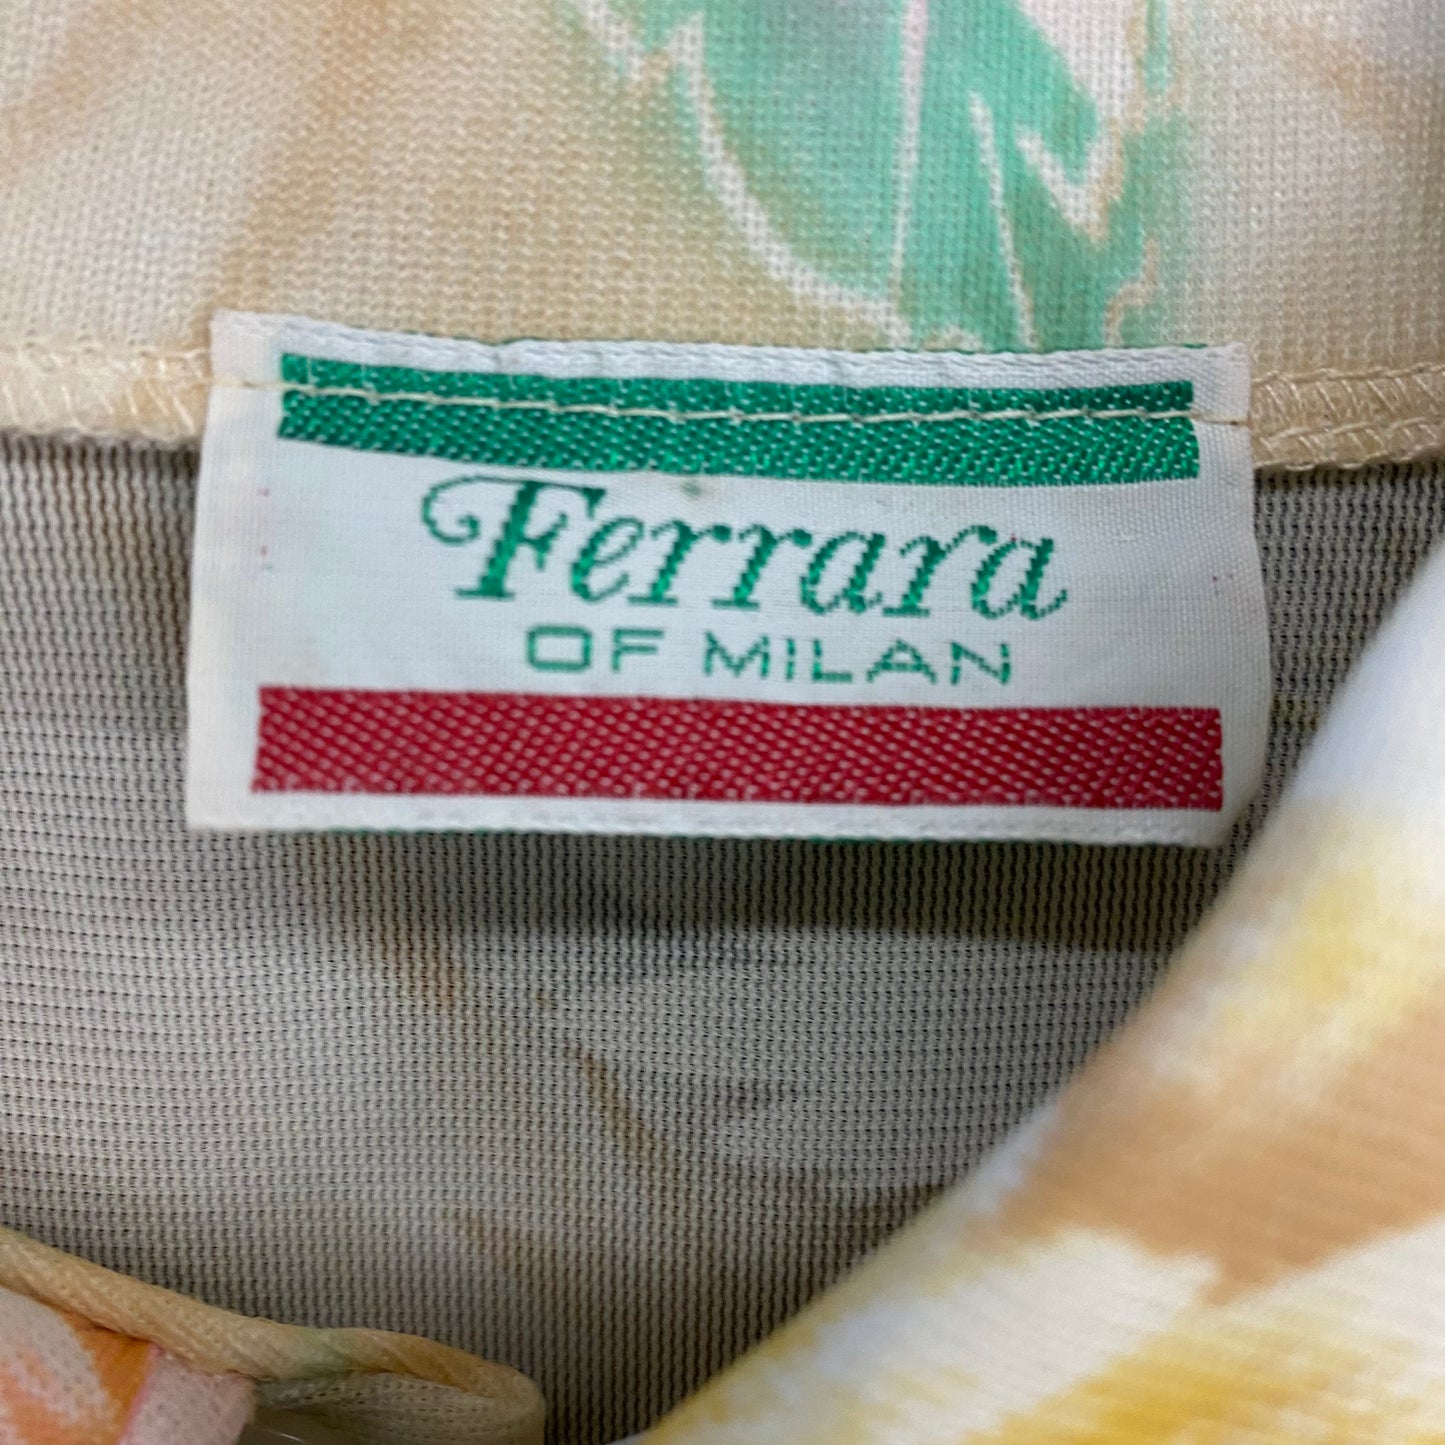 1970s Ferrara of Milan AOP Floral Button Up - Size Medium